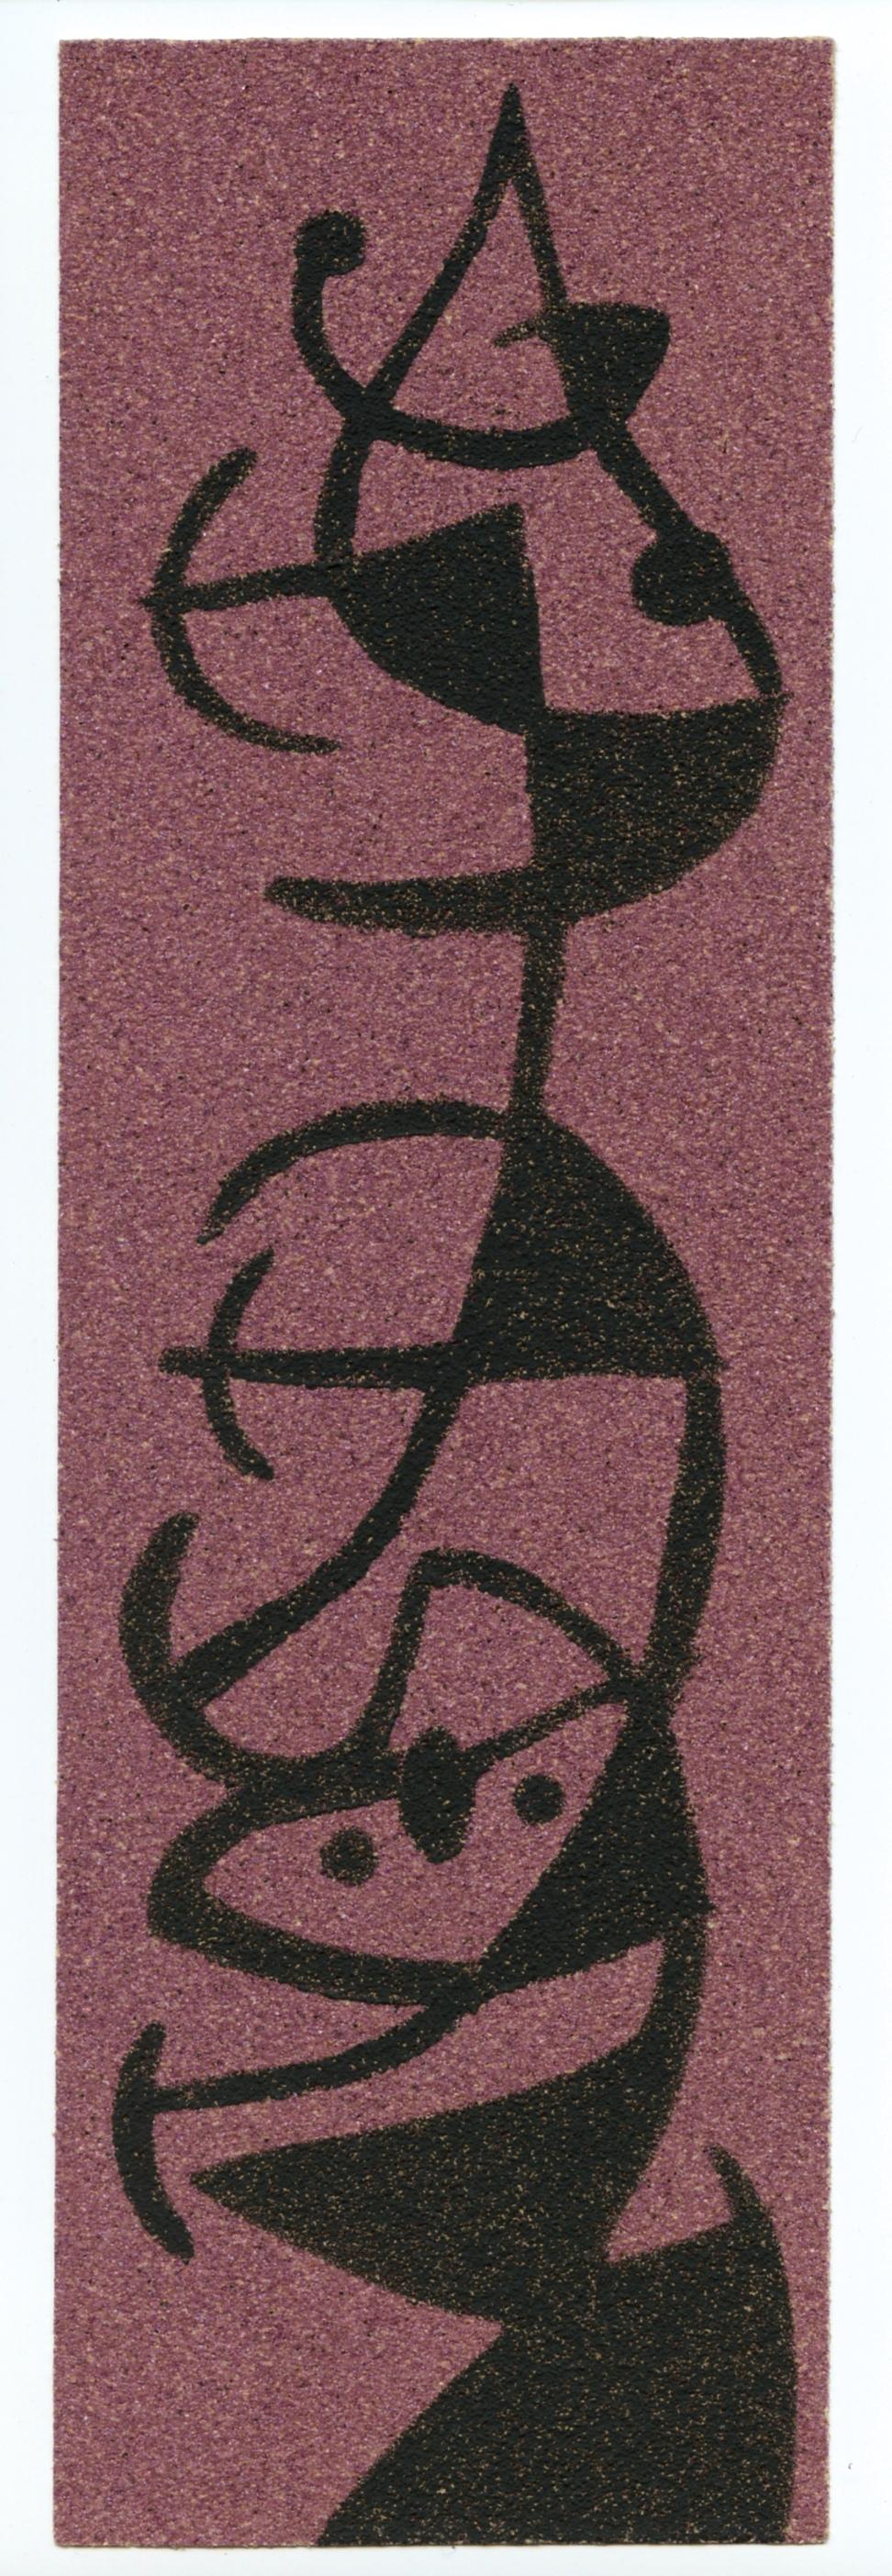 "Femme et oiseau II" pochoir on sandpaper